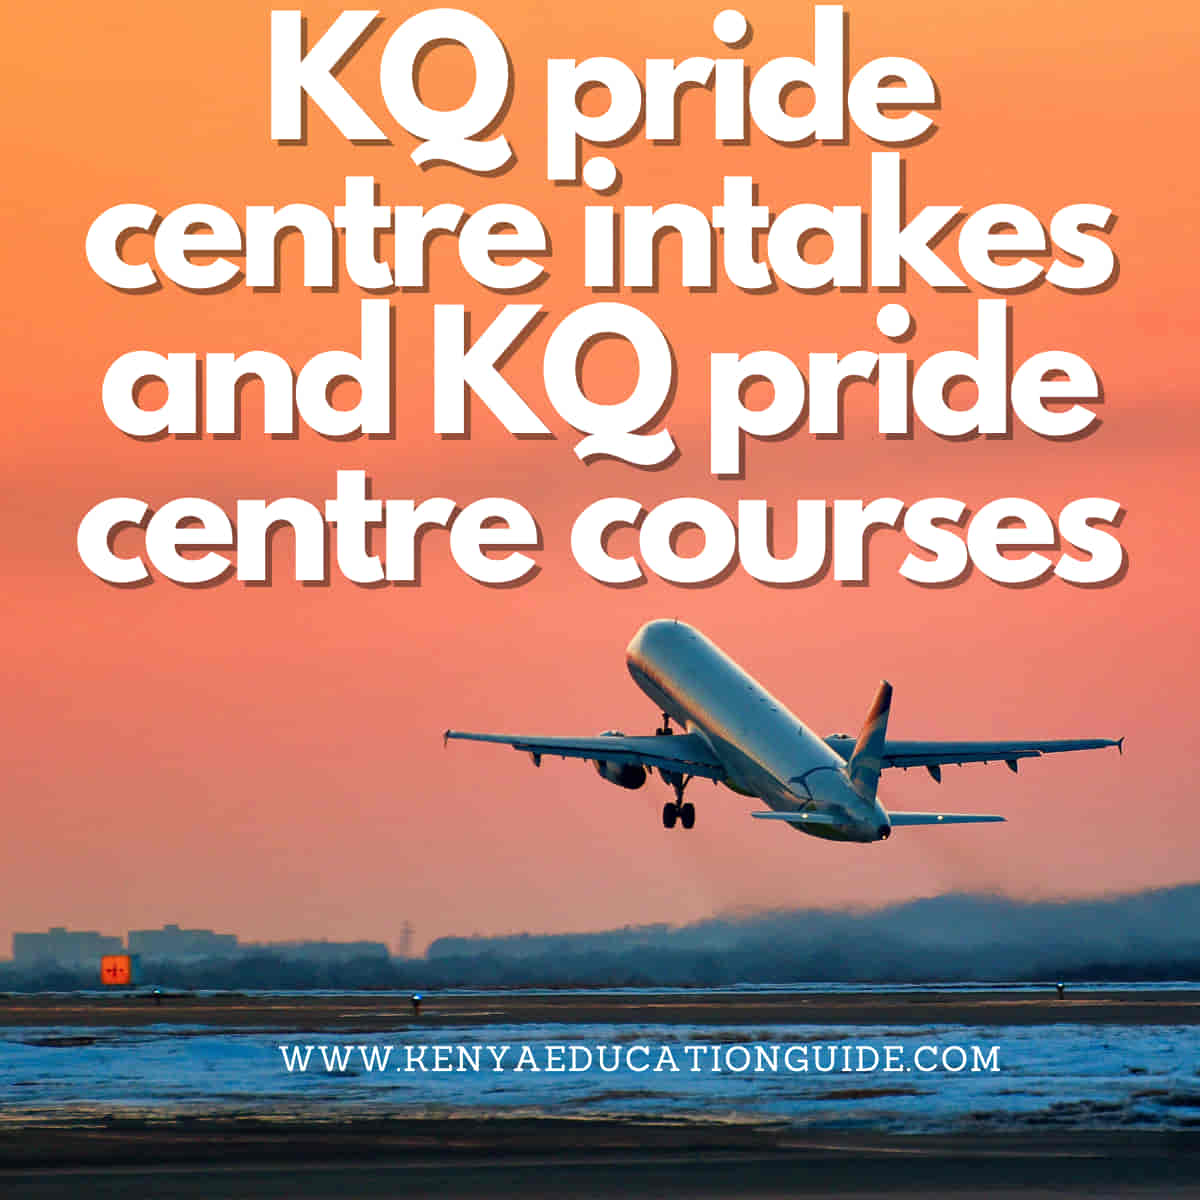 KQ pride centre intakes